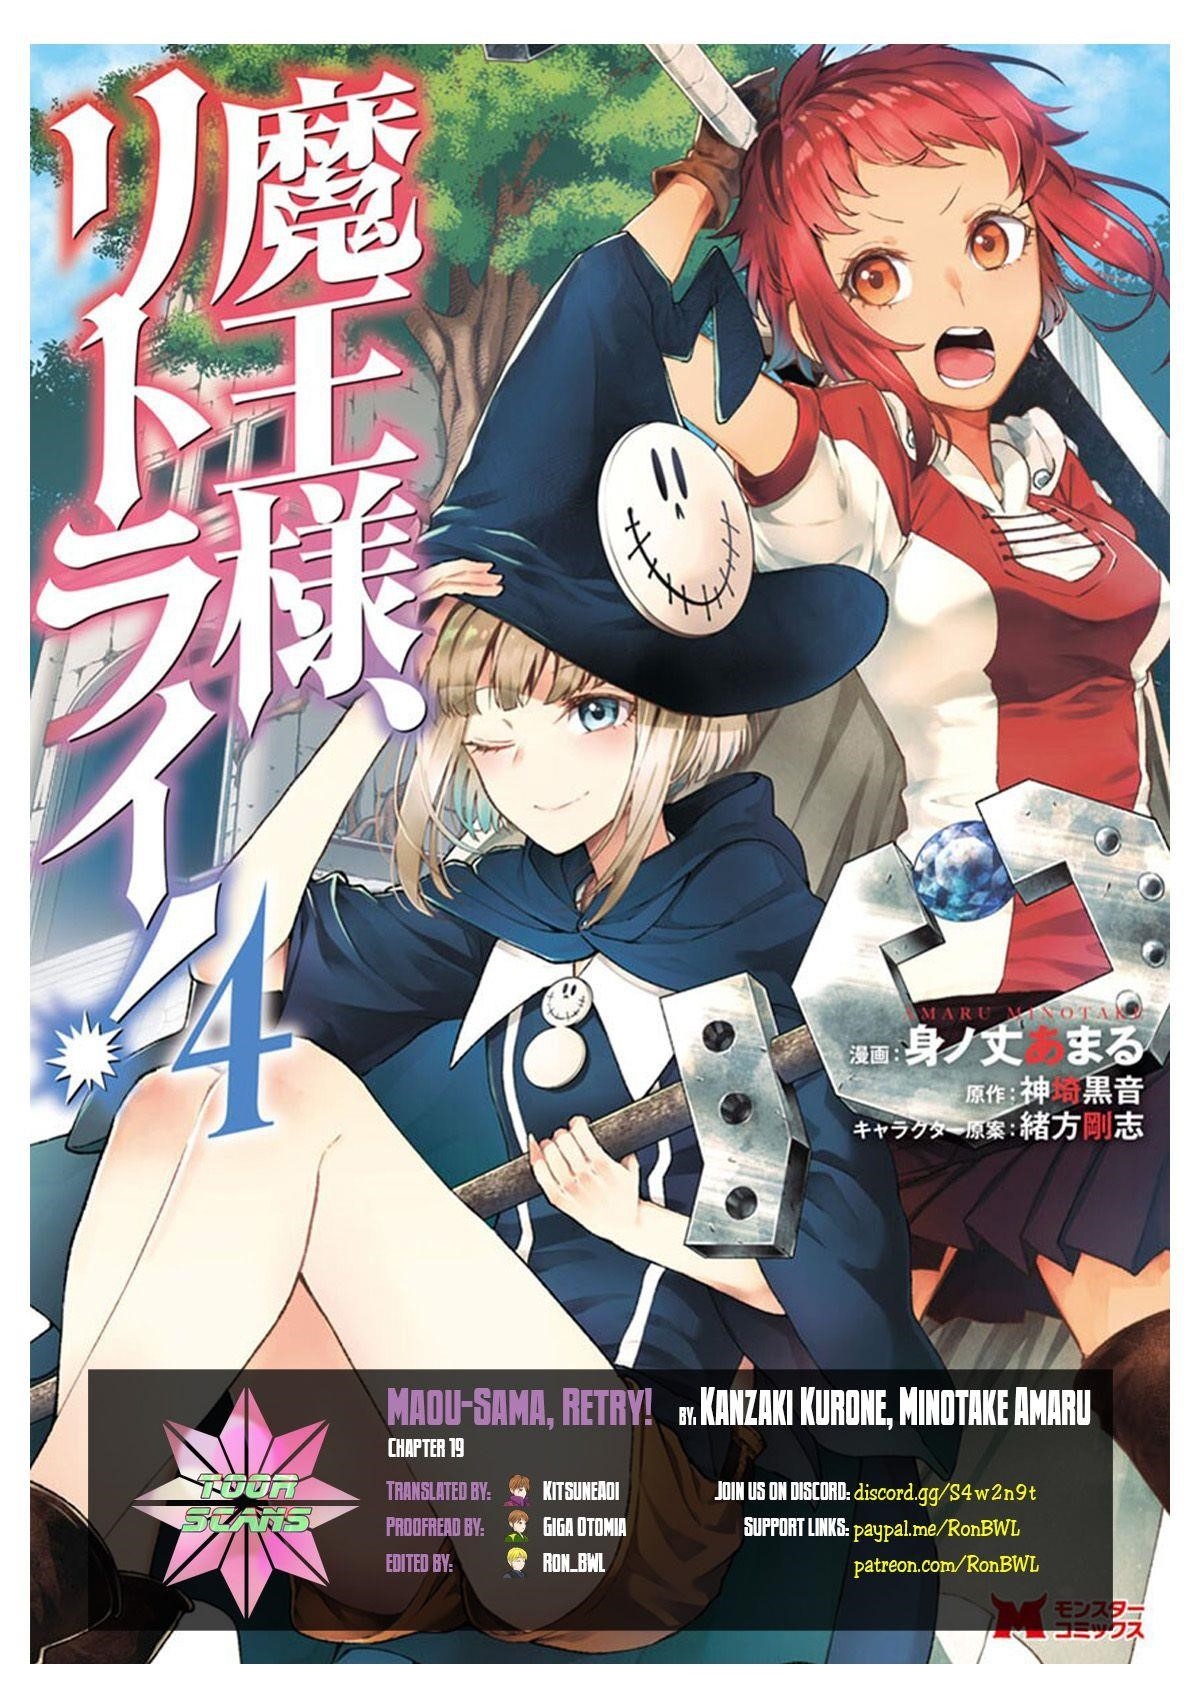 Demon Lord, Retry! (Light Novel) Manga